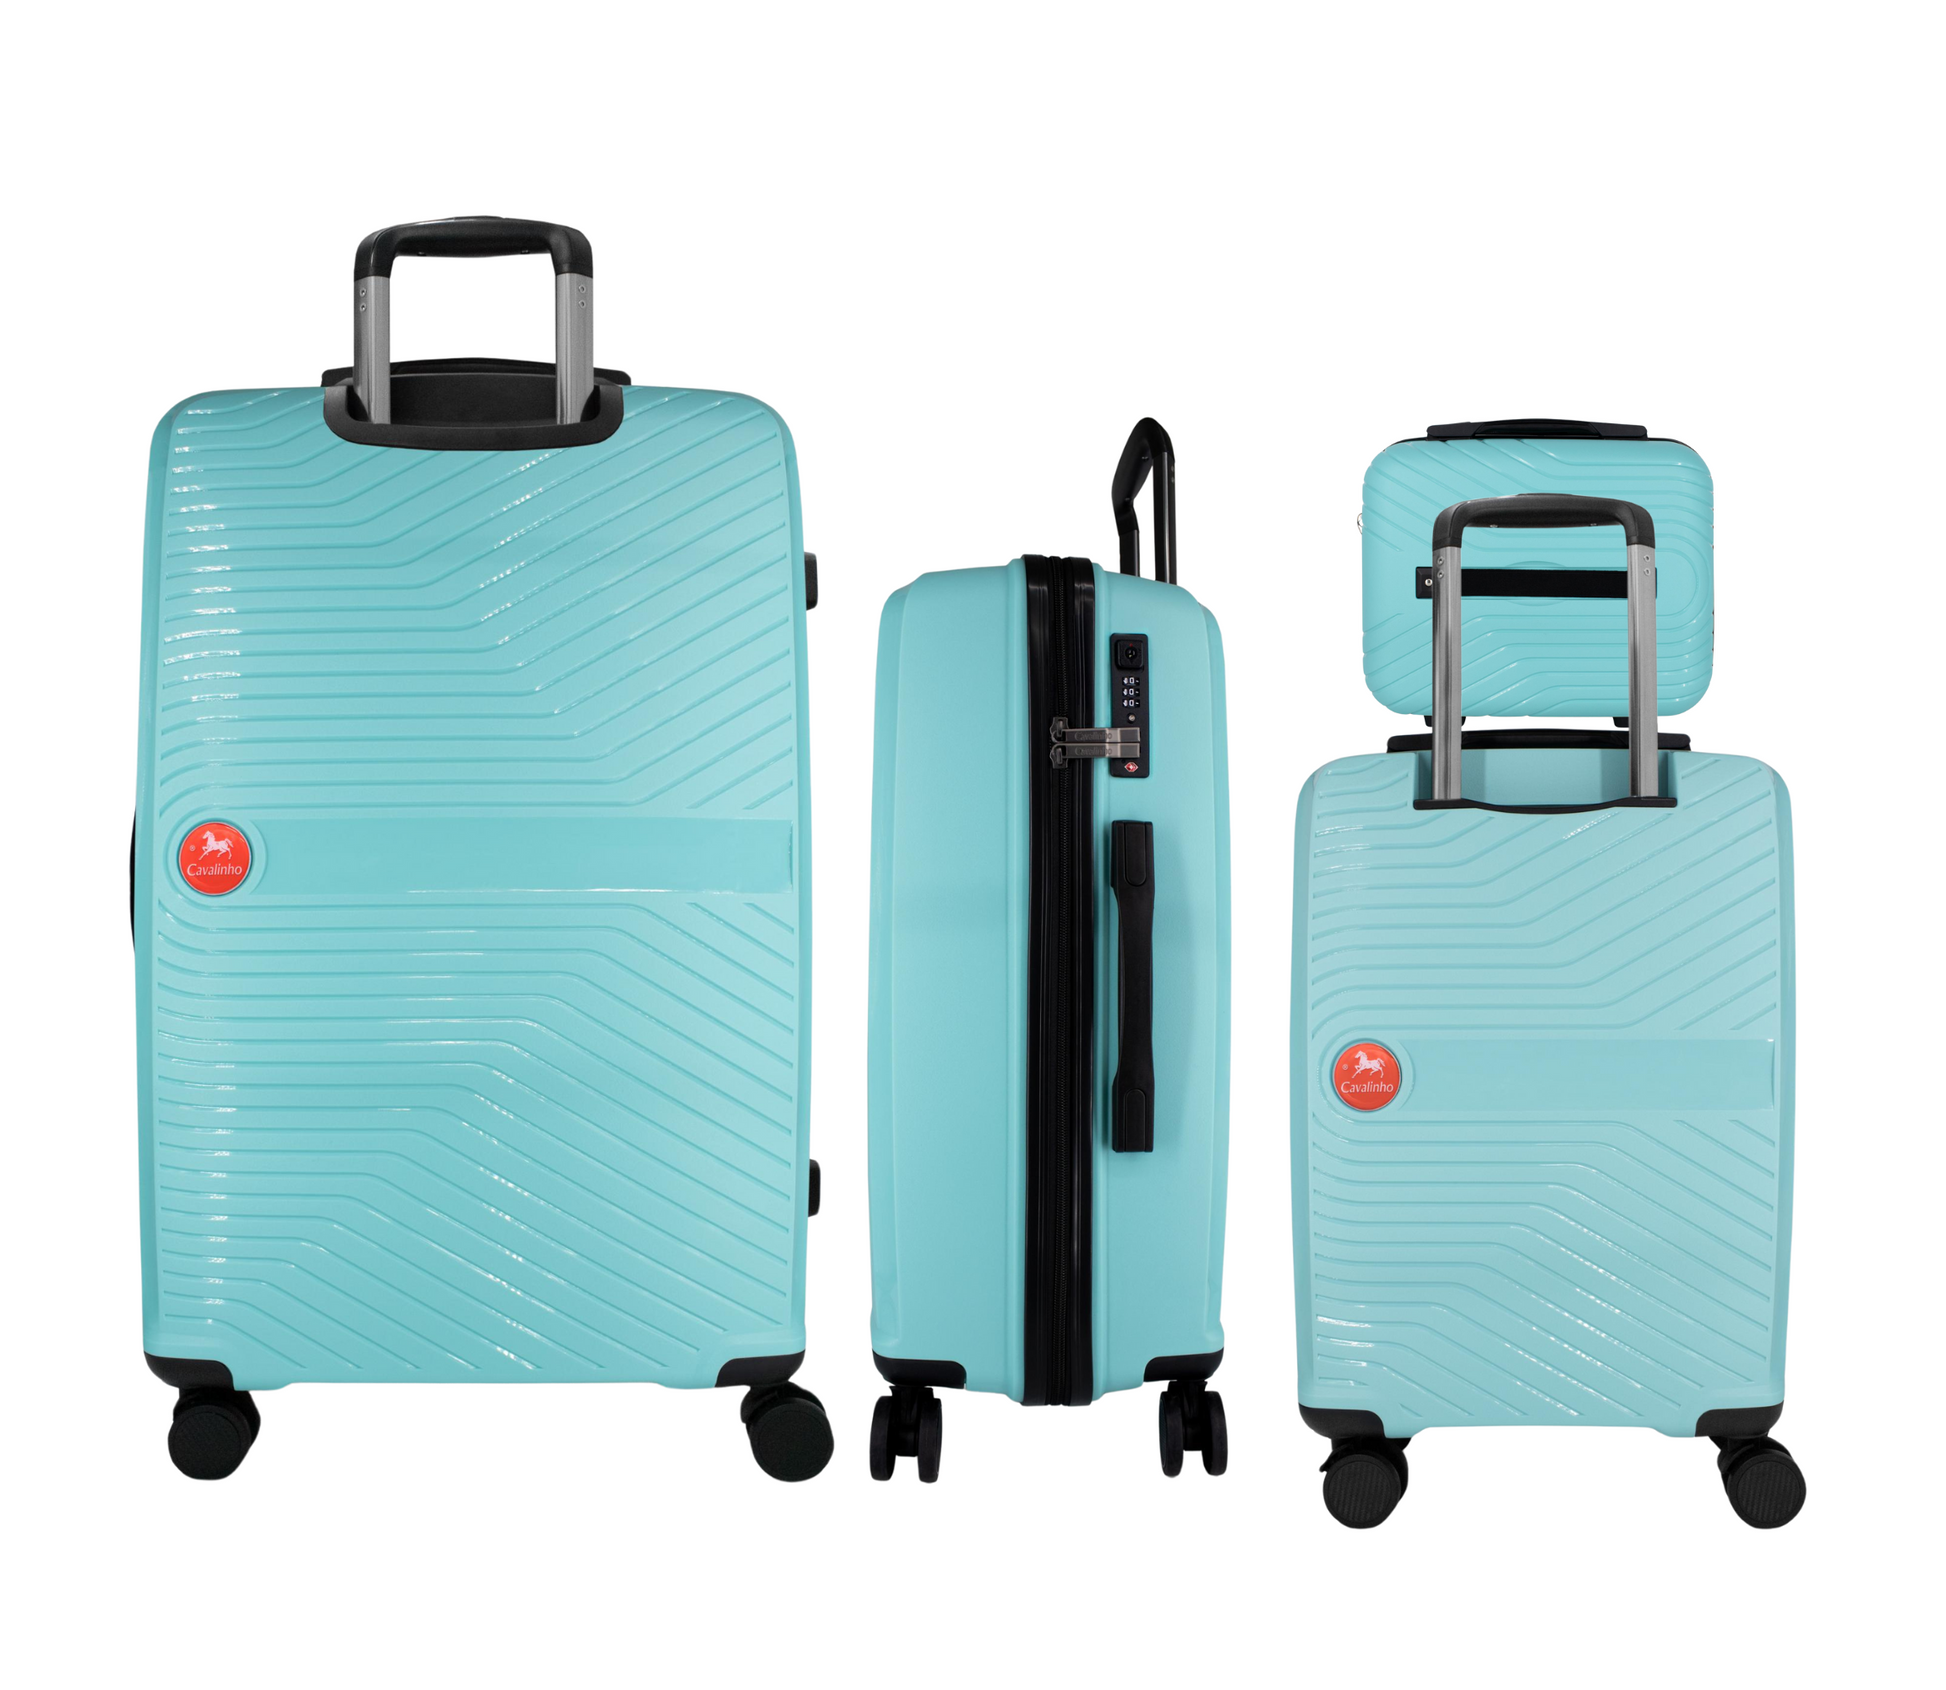 Cavalinho Canada & USA 4 Piece Set of Colorful Hardside Luggage (15", 19", 24", 28") - LightBlue - 68020004.10.S4_2